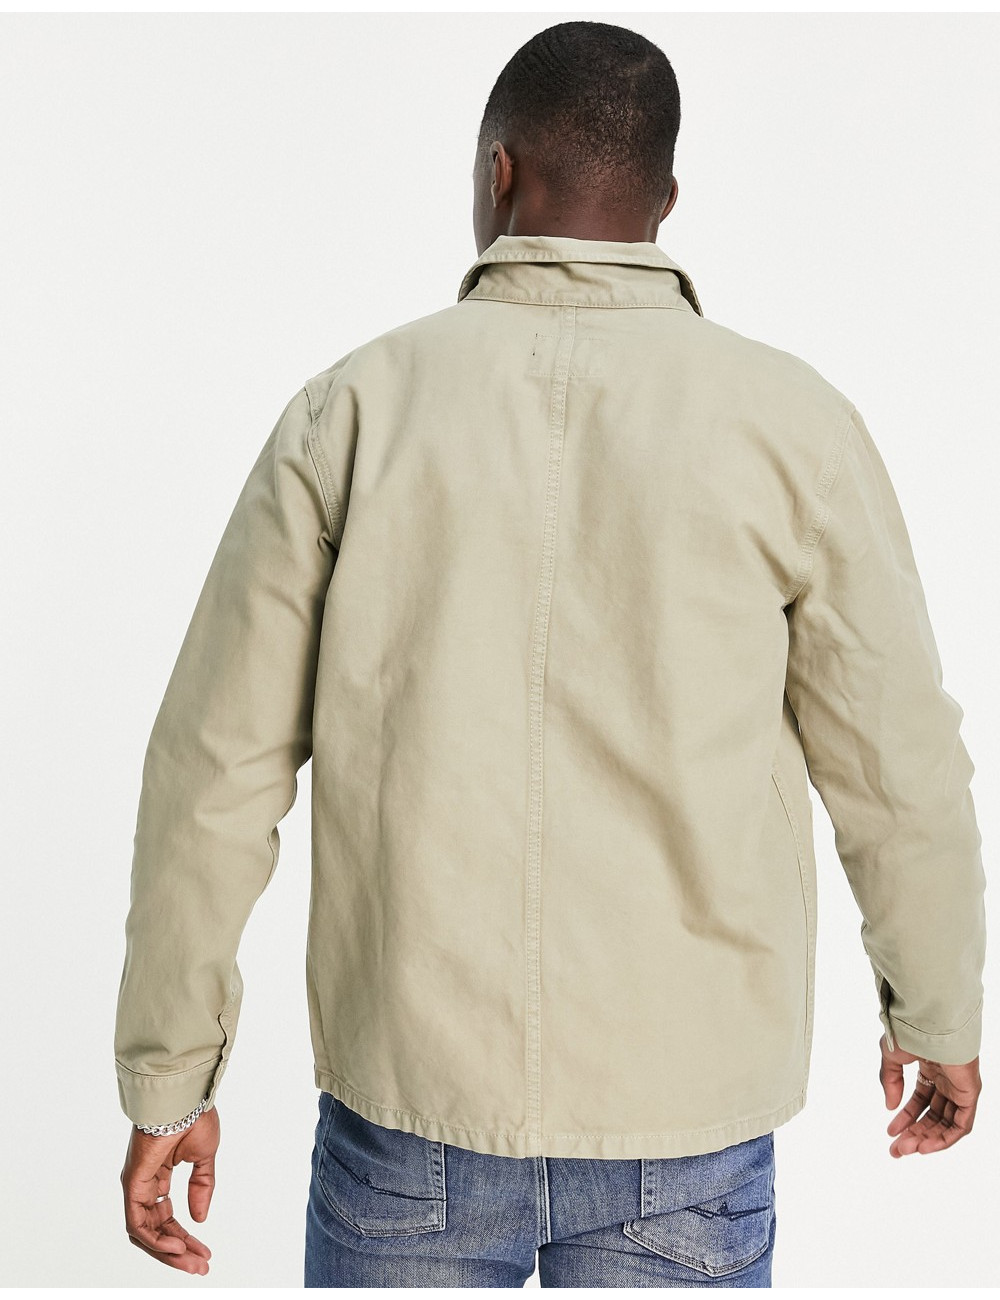 Superdry utility worker jacket